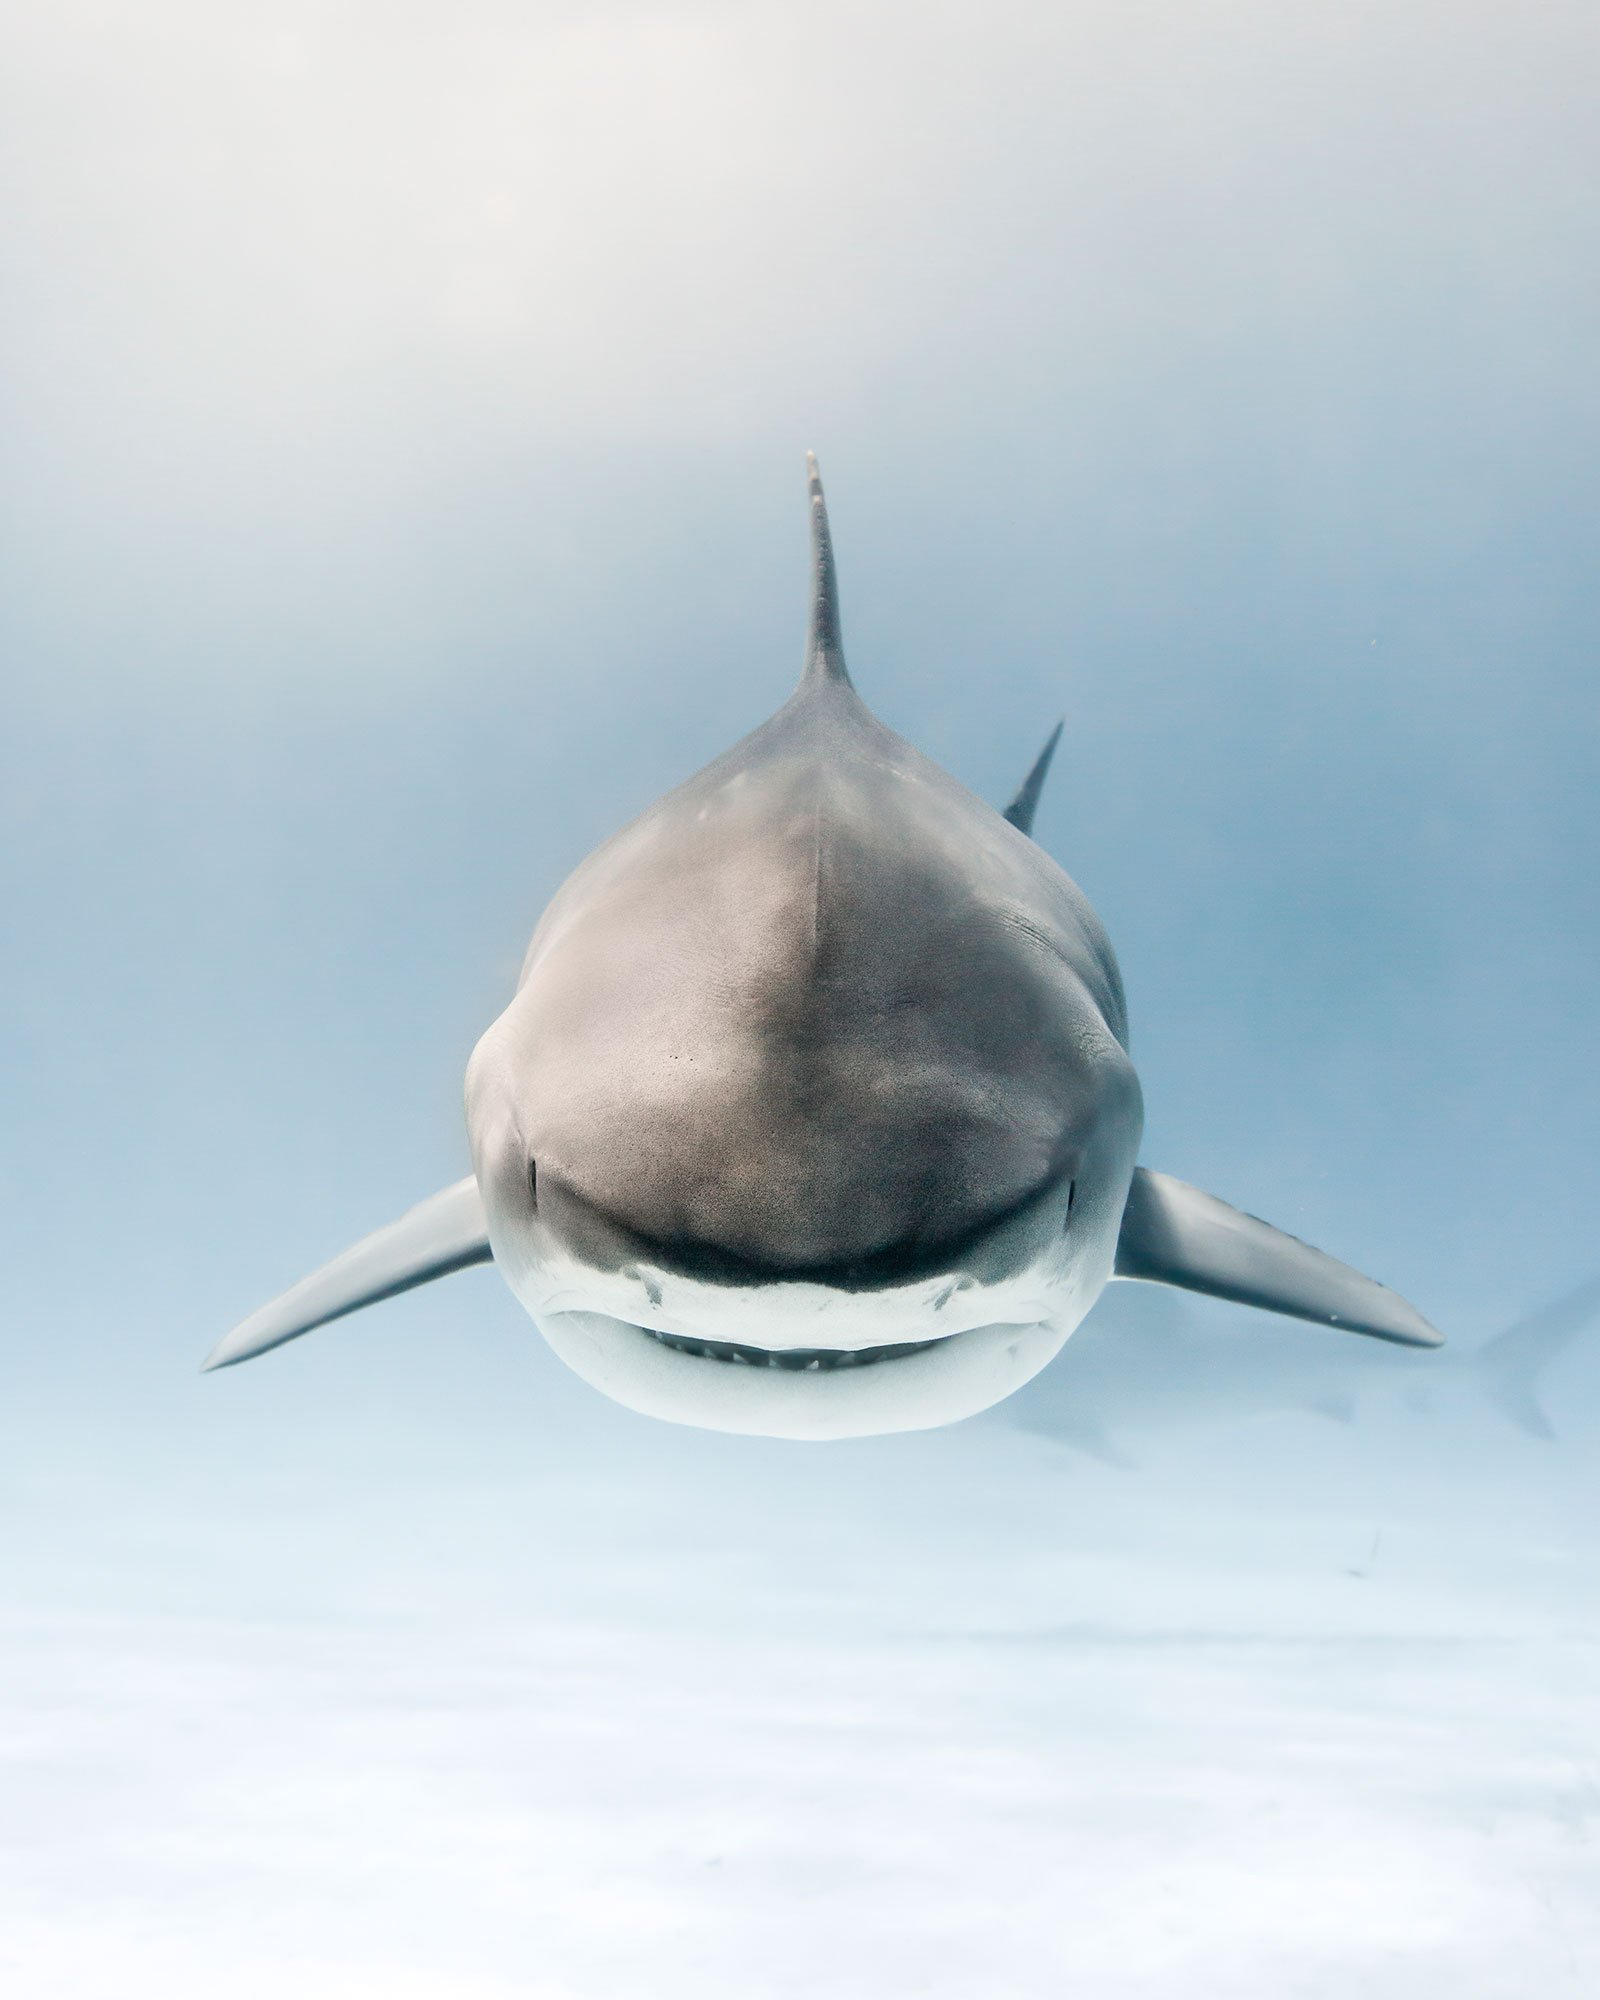 forward shot of shark in faint clear blue water